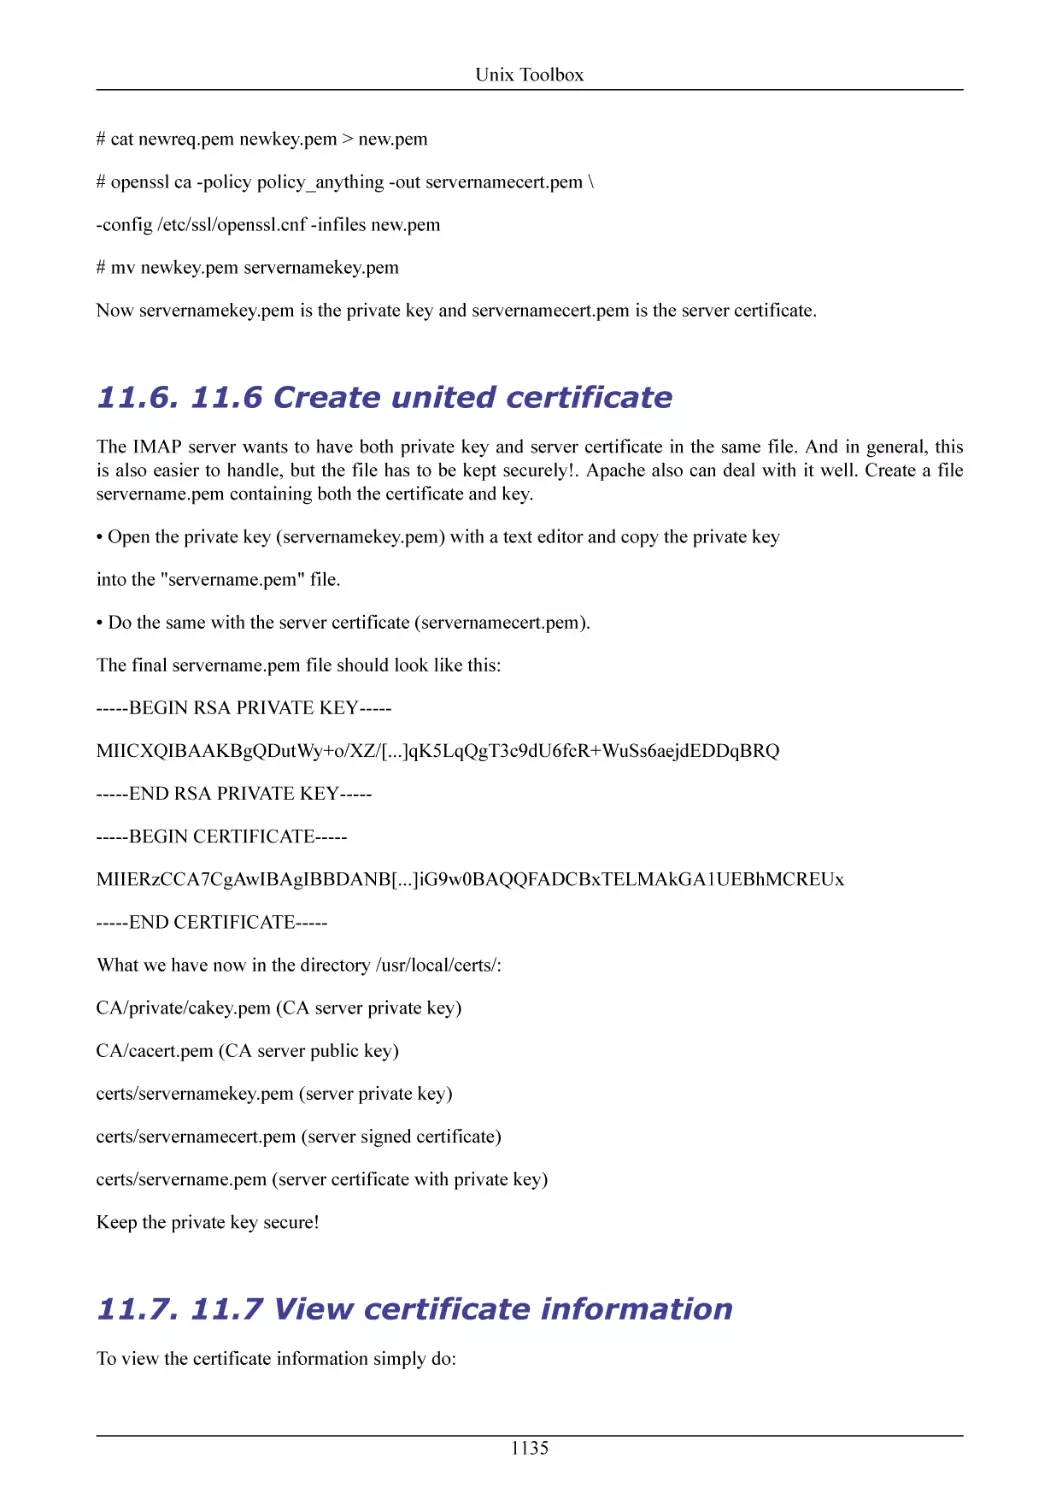 11.6 Create united certificate
11.7 View certificate information